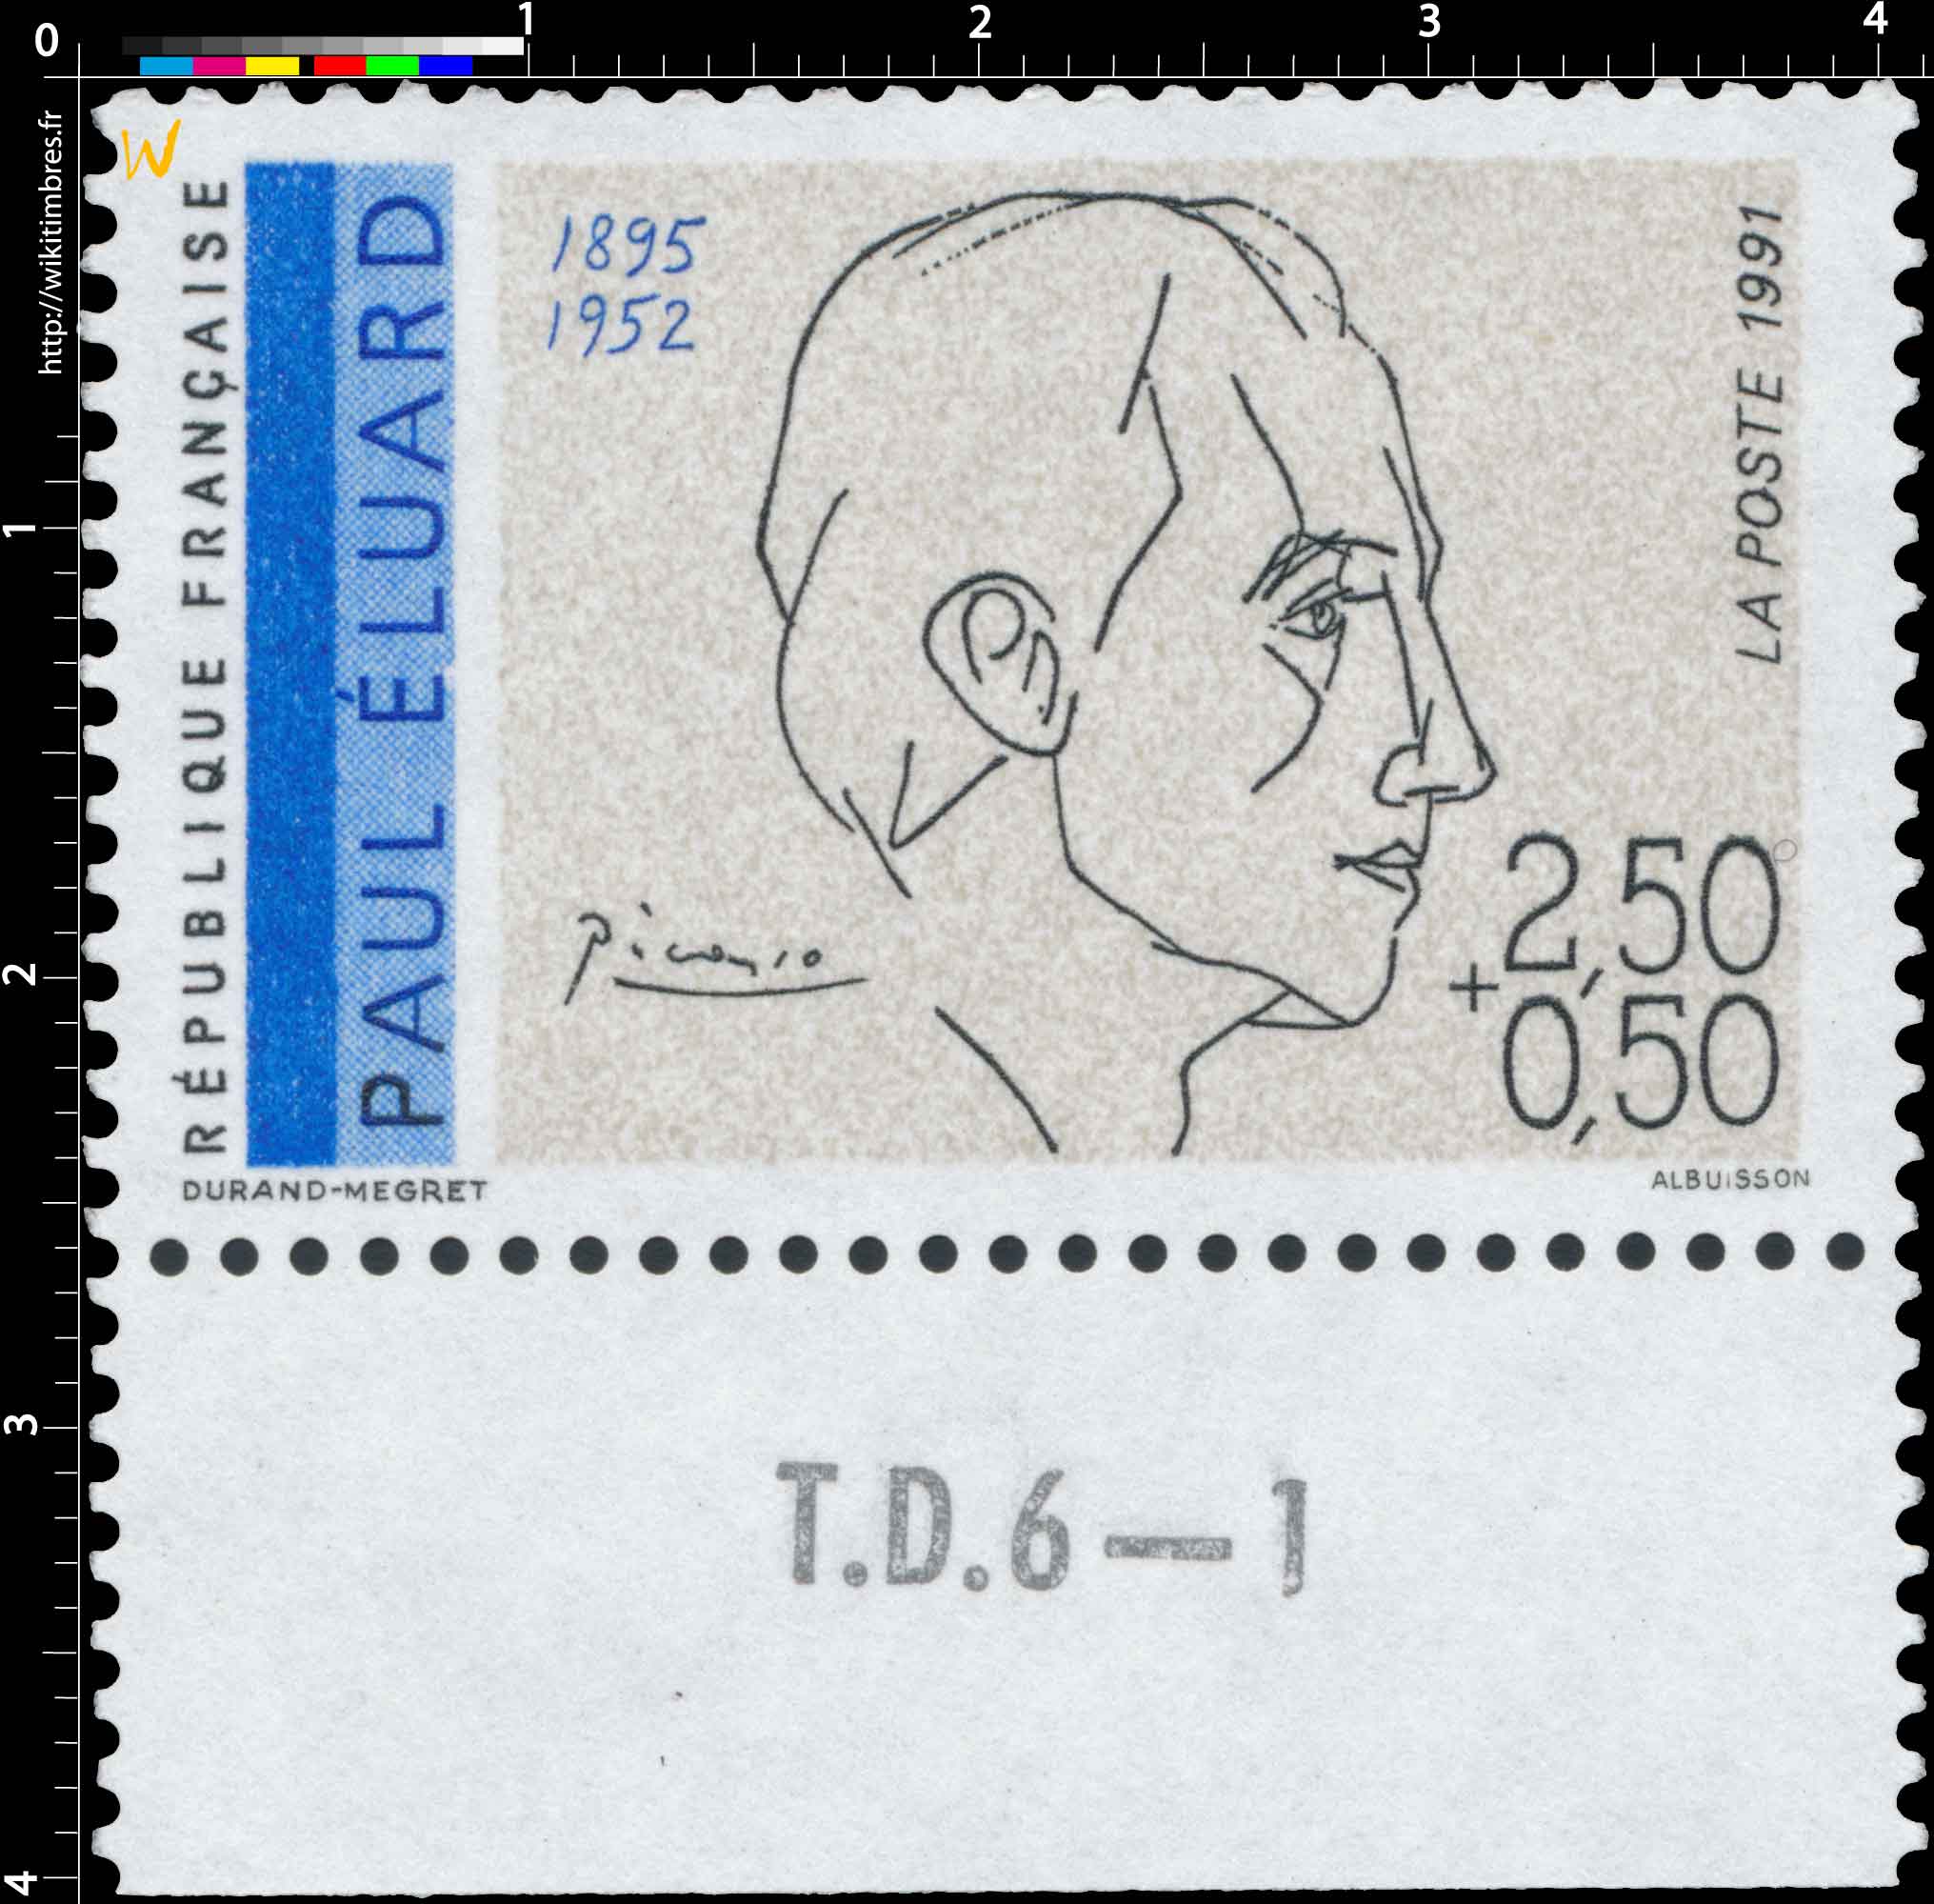 1991 PAUL ÉLUARD 1895-1952